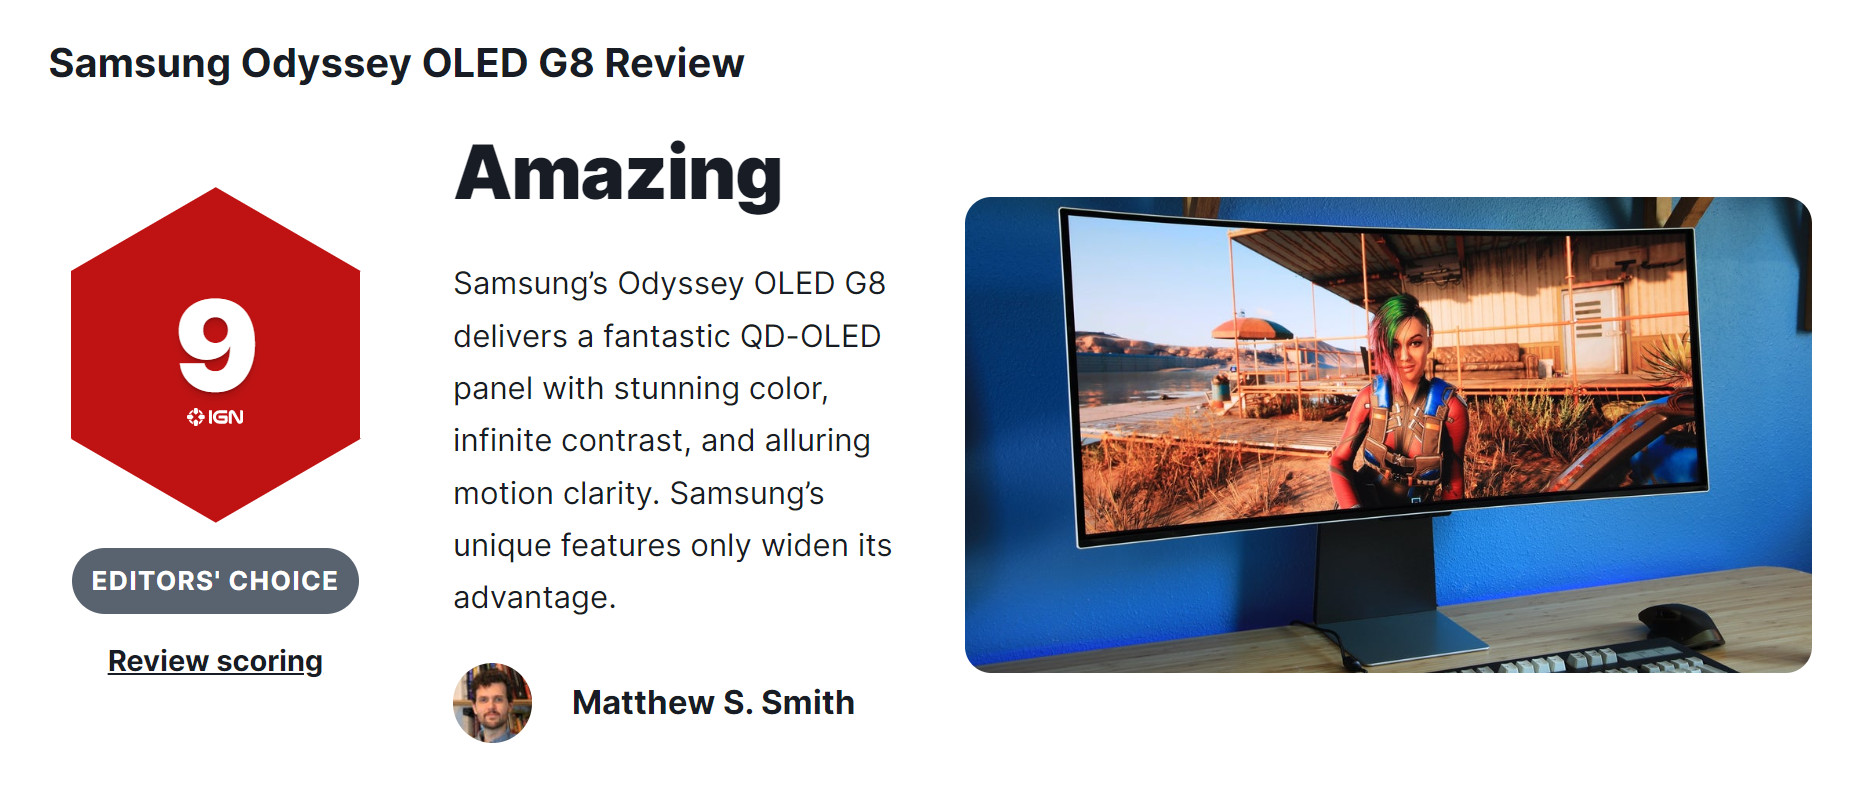 三星奥德赛OLED G8显示器获得IGN 9分评价_0